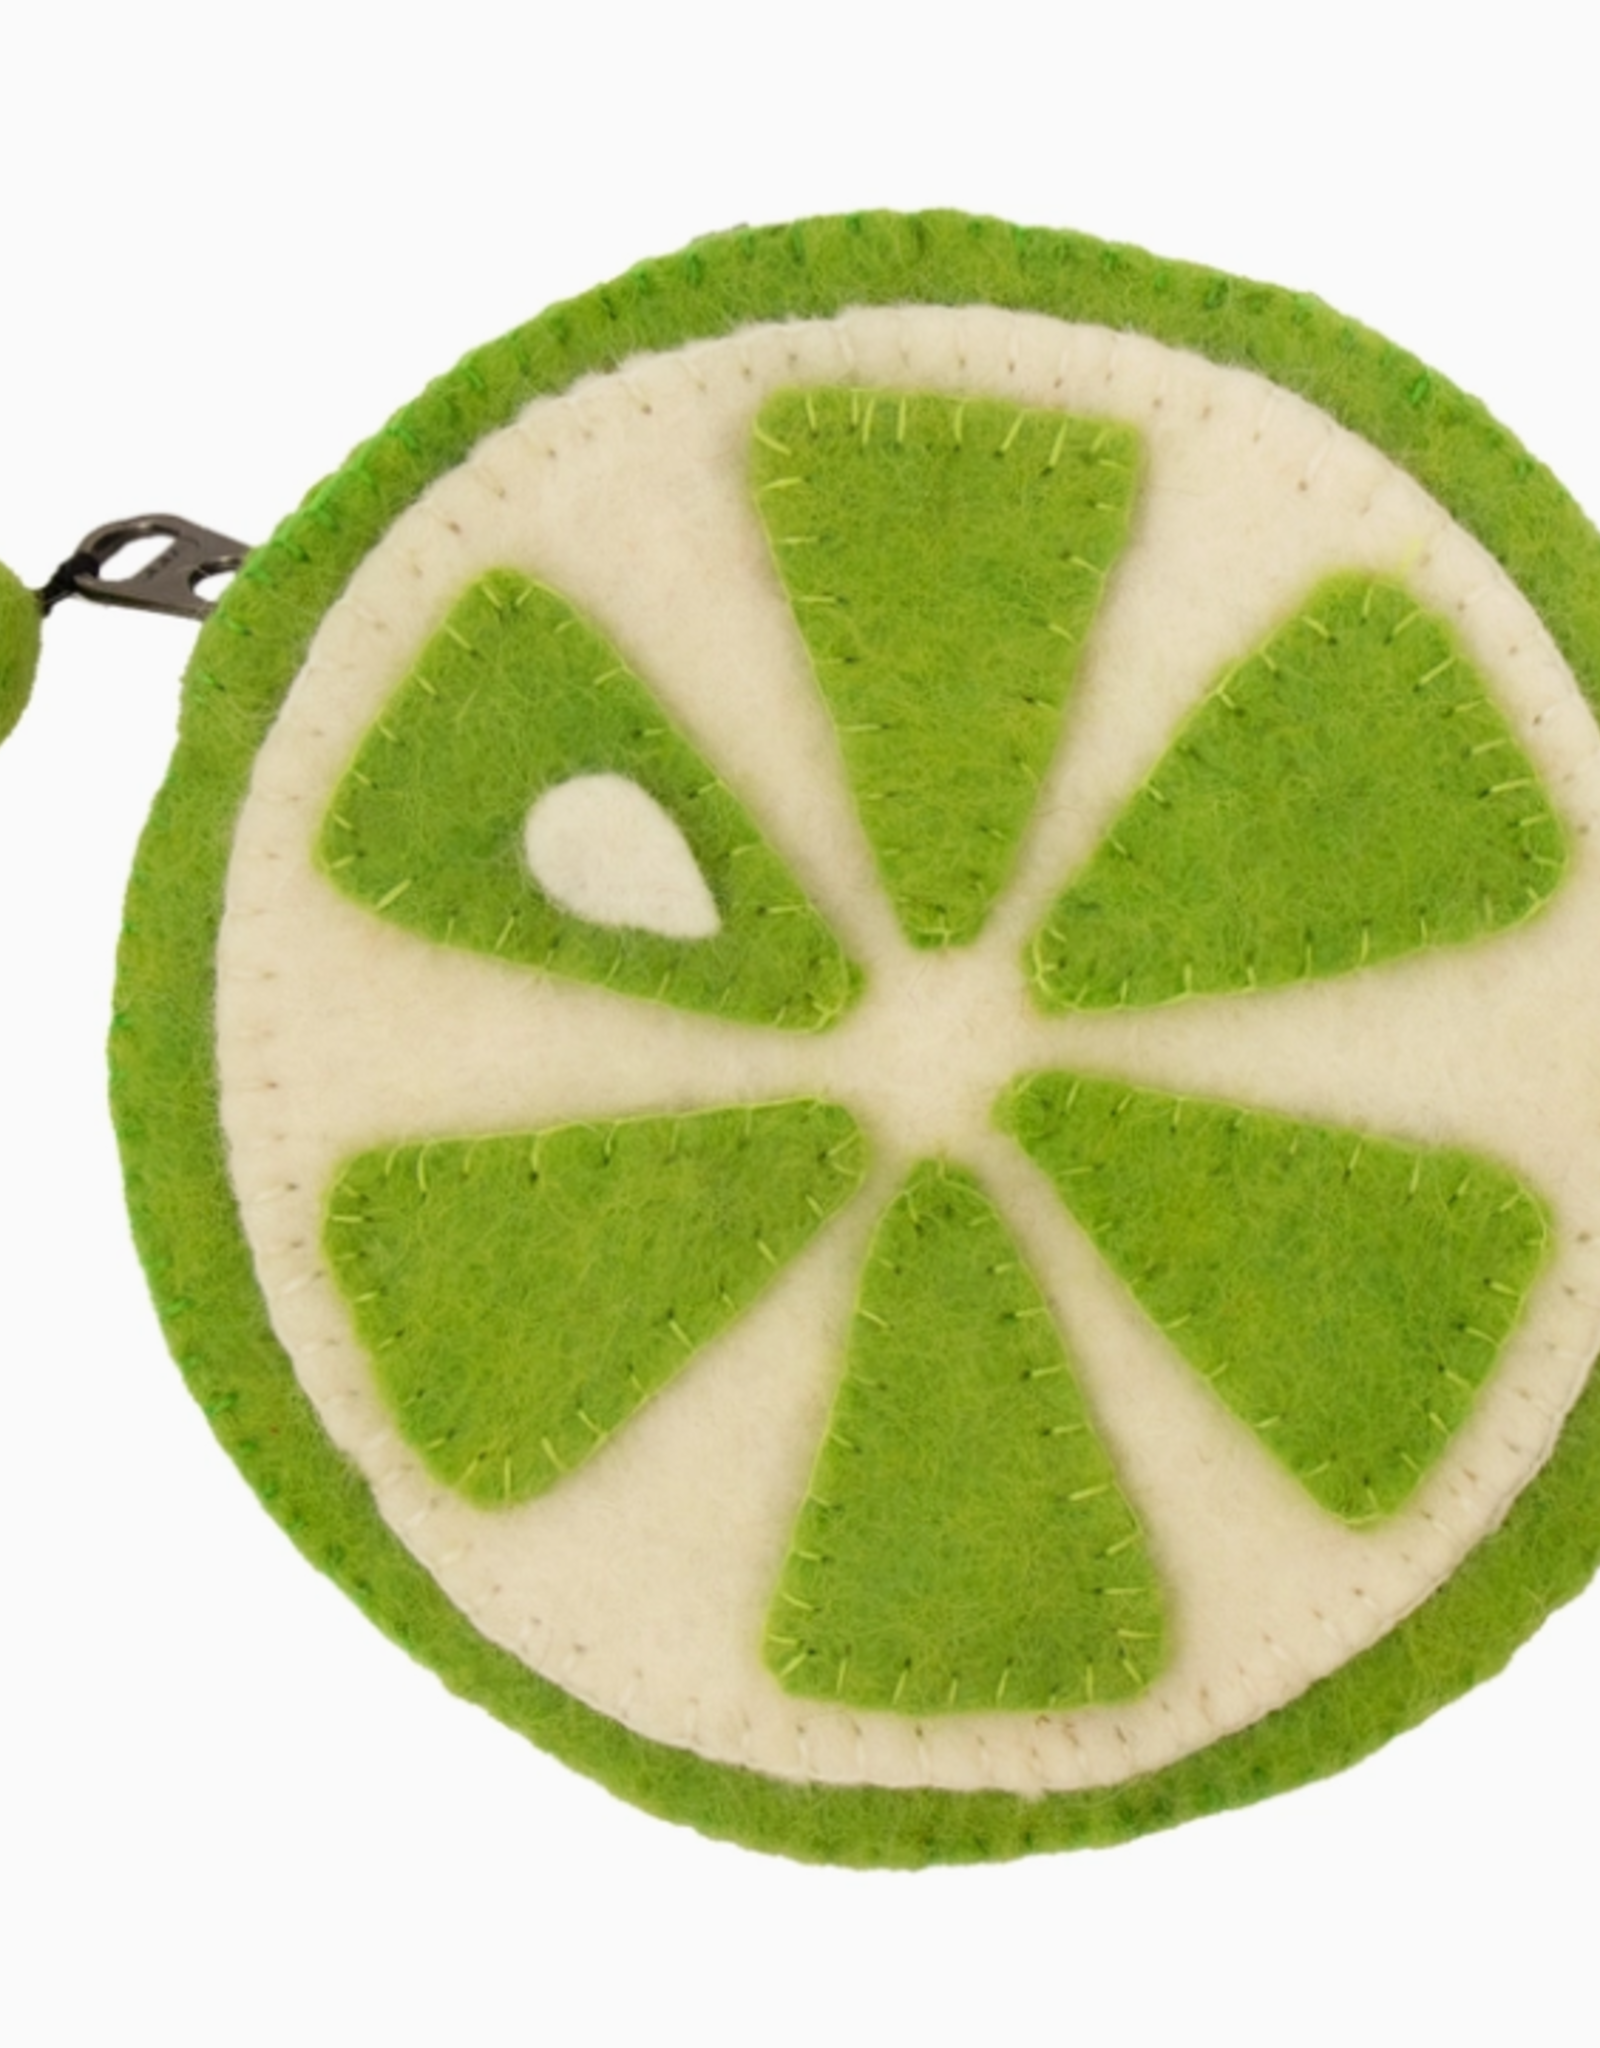 Global Crafts Lime Slice Felt Coin Purse